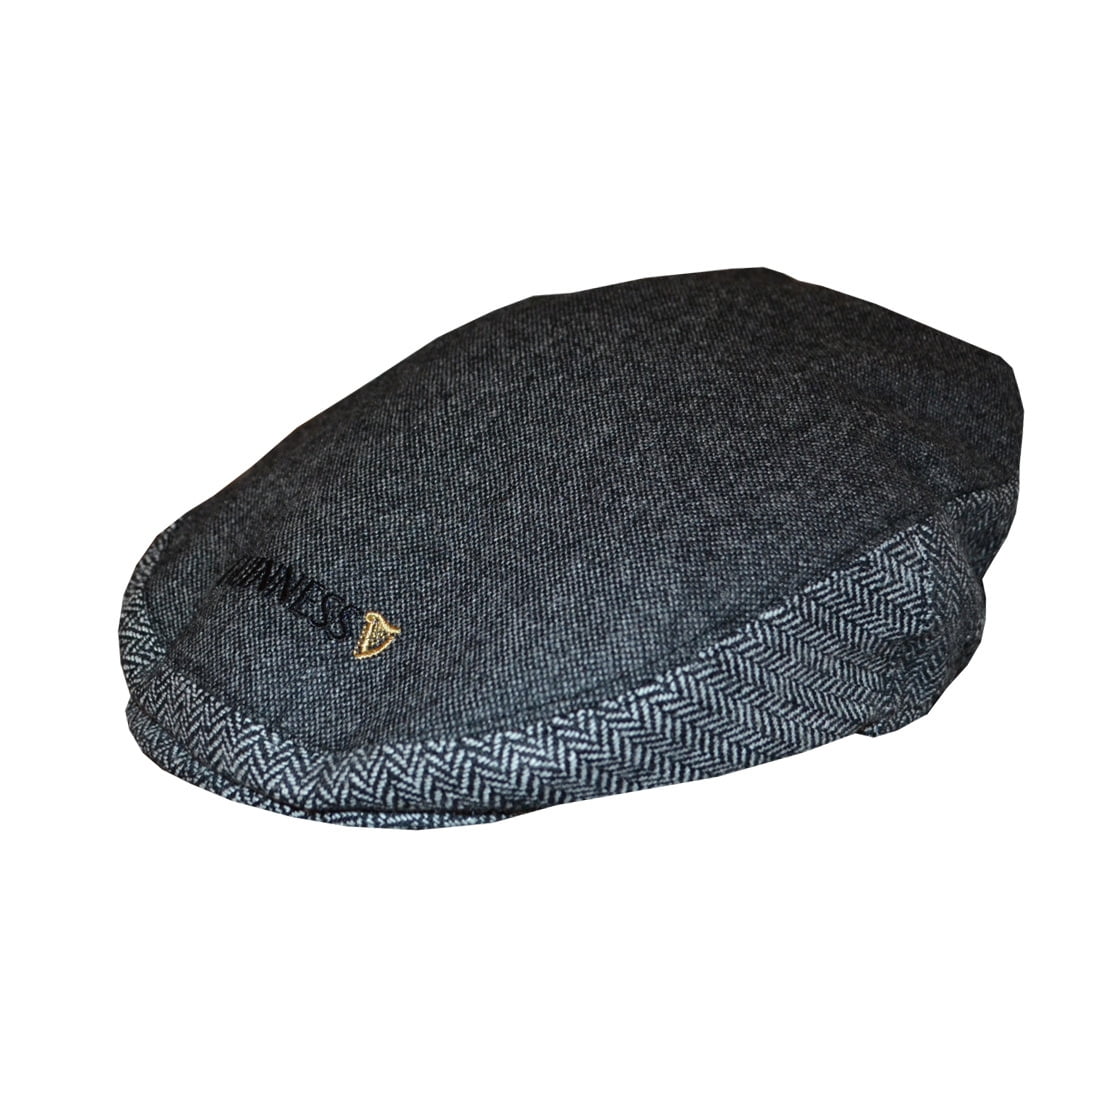 Traditional Irish tweed flat cap ready for shipping -HANDMADE IN IRELAND brown herringbone 100/% wool -padded